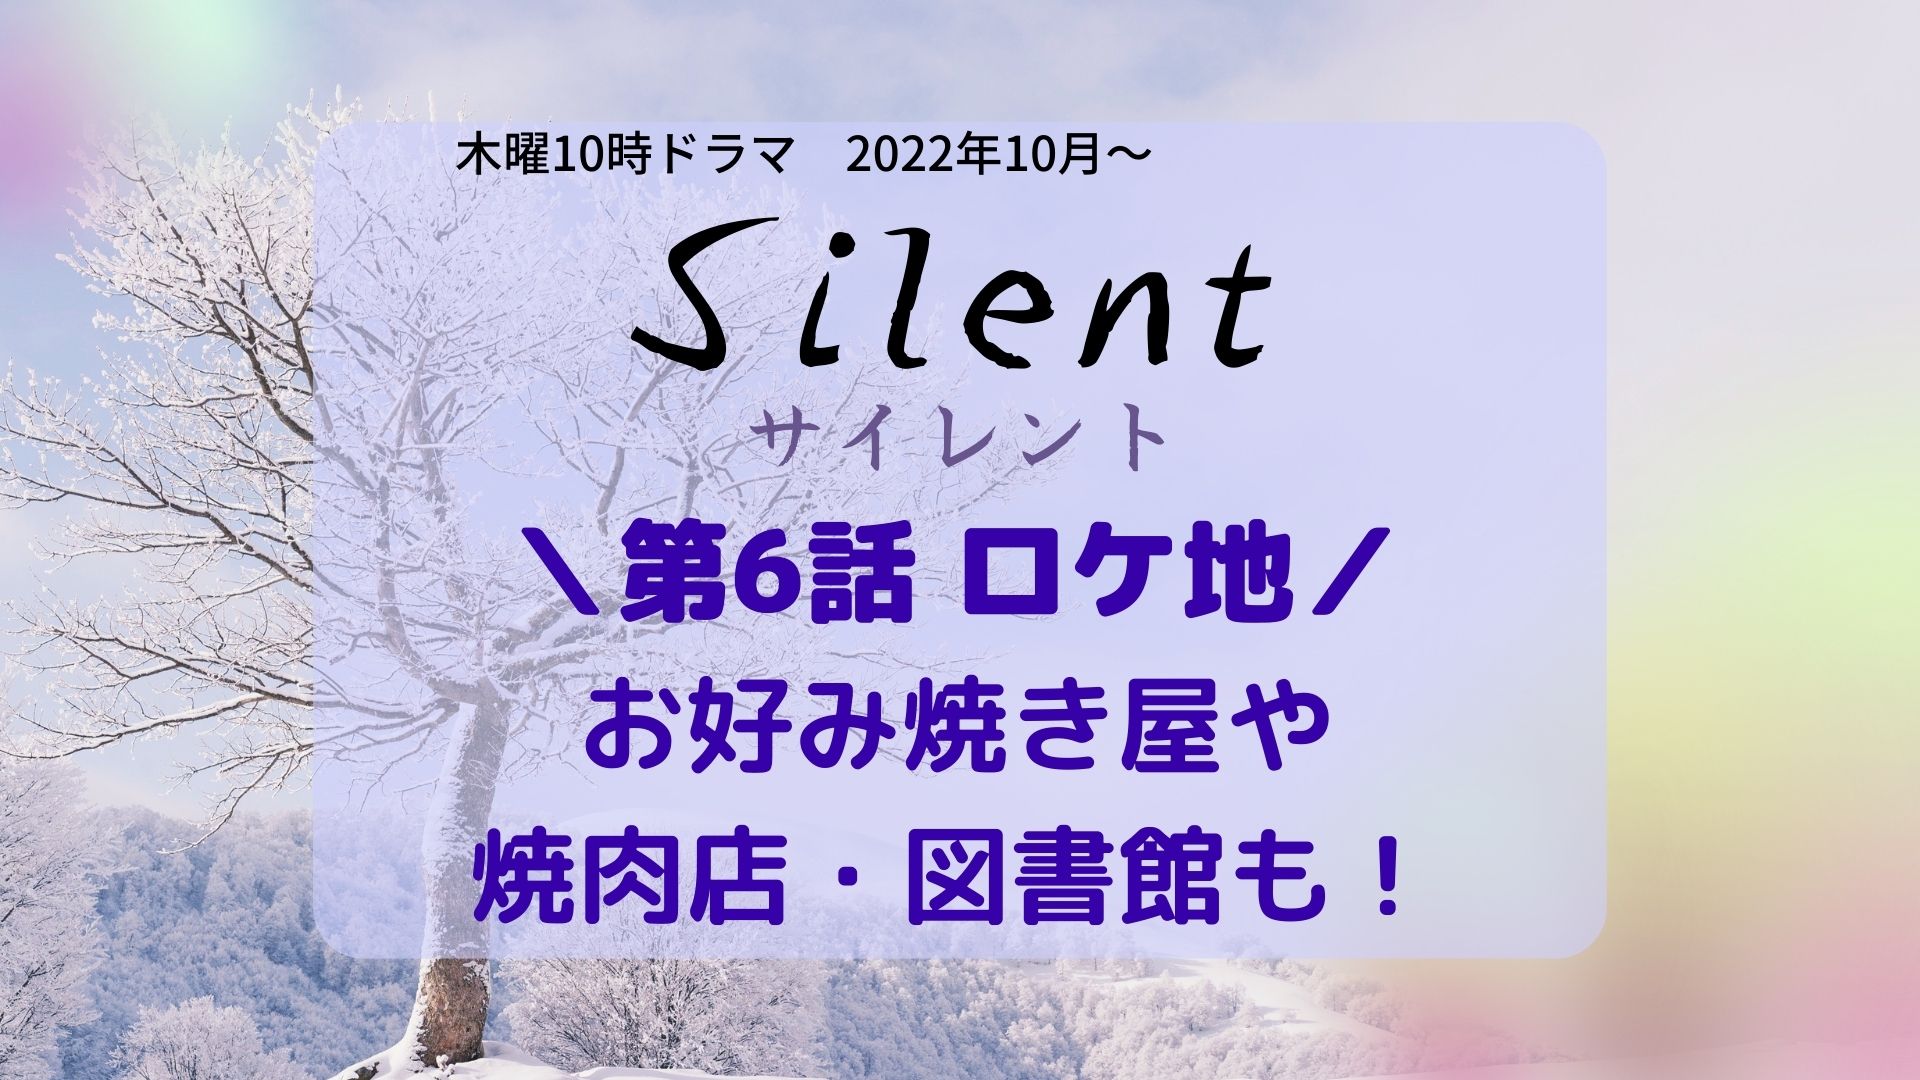 Silent (サイレント)6話ロケ地